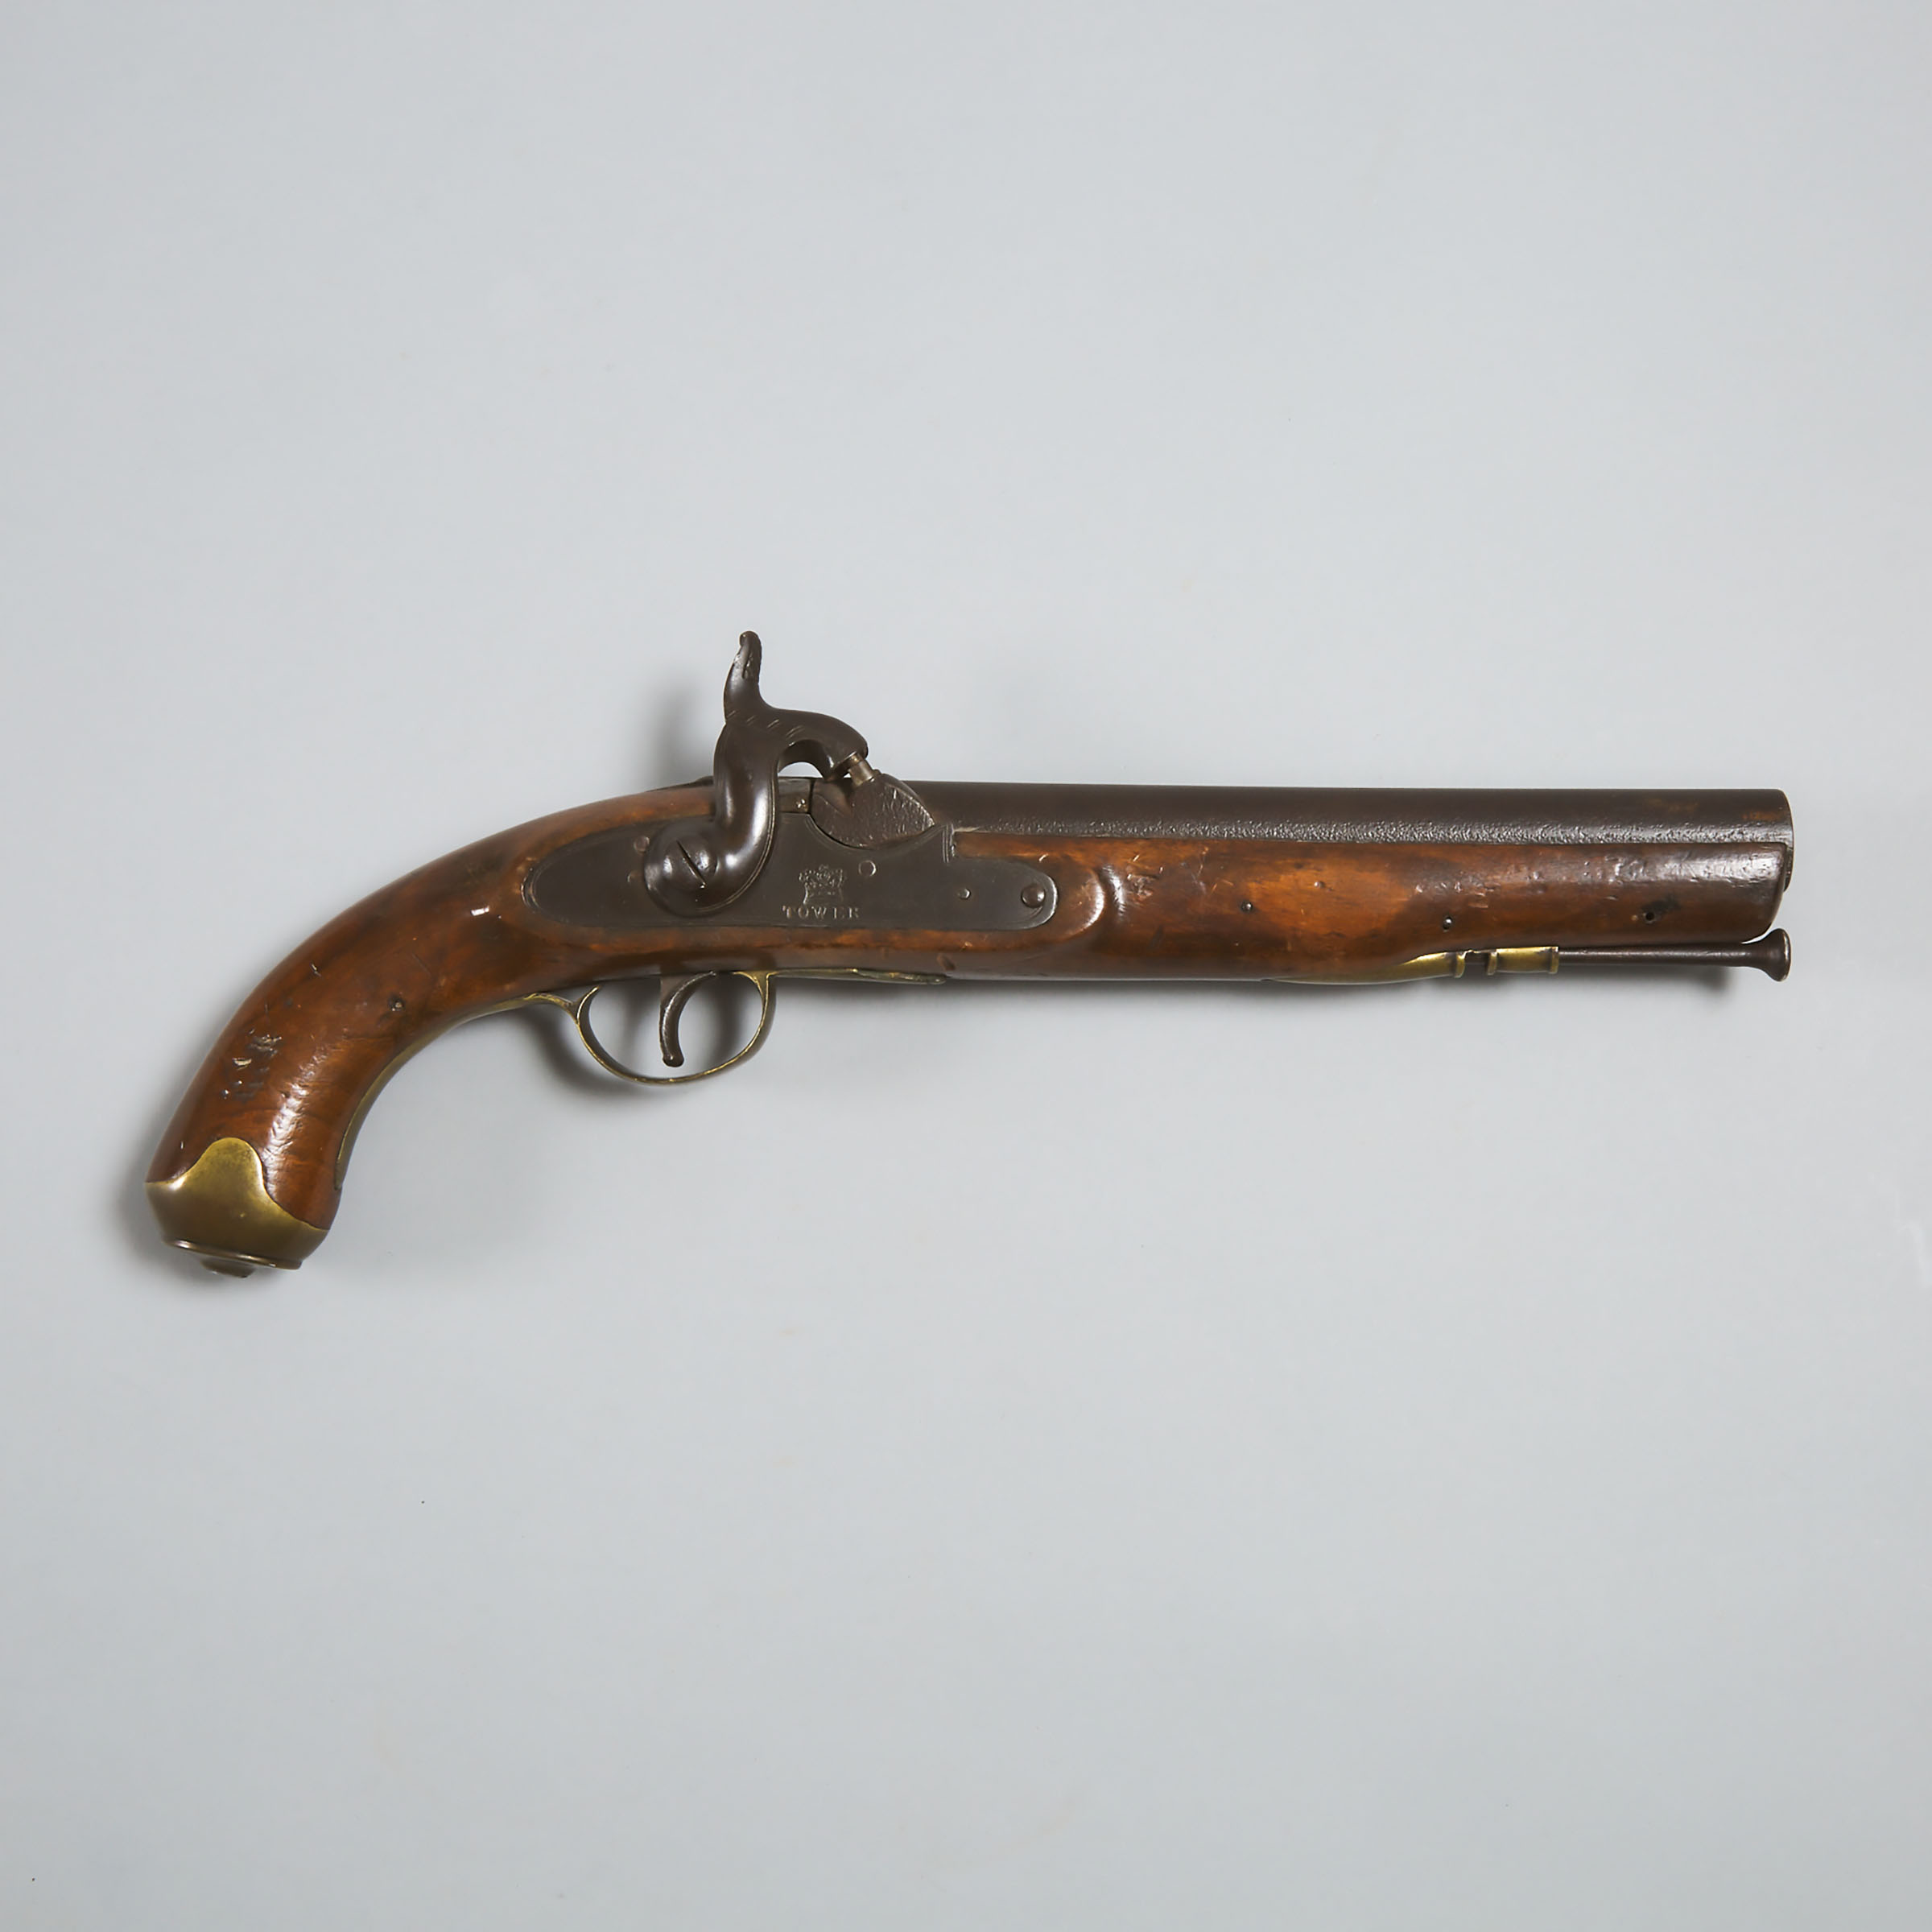 English 'Tower' Service Pistol, 18th century